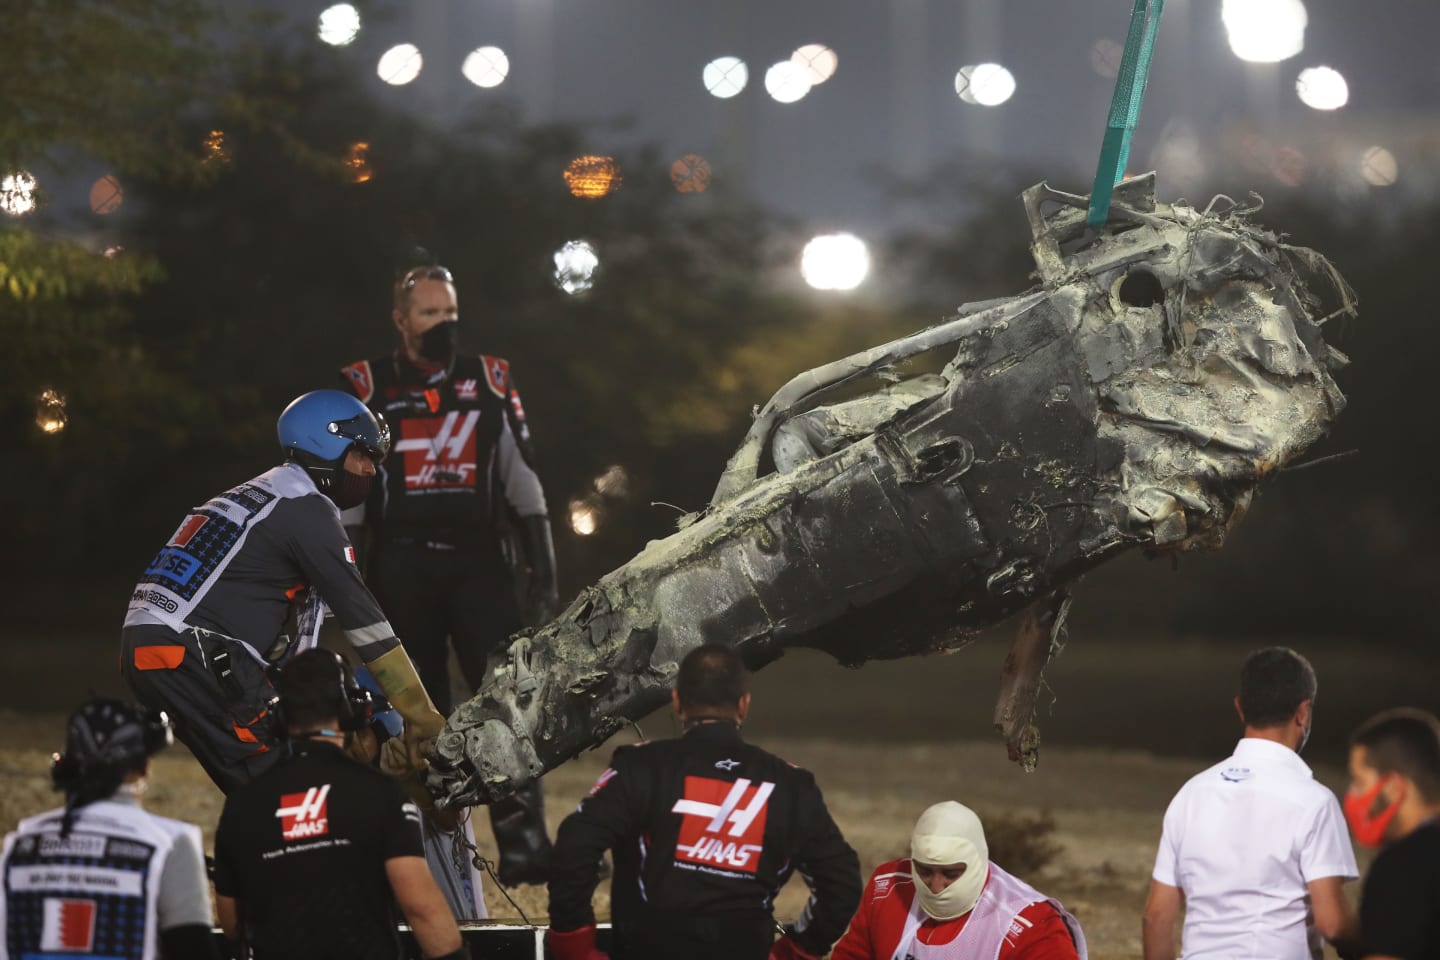 BAHRAIN, BAHRAIN - NOVEMBER 29: Track marshals clear the debris following the crash of Romain